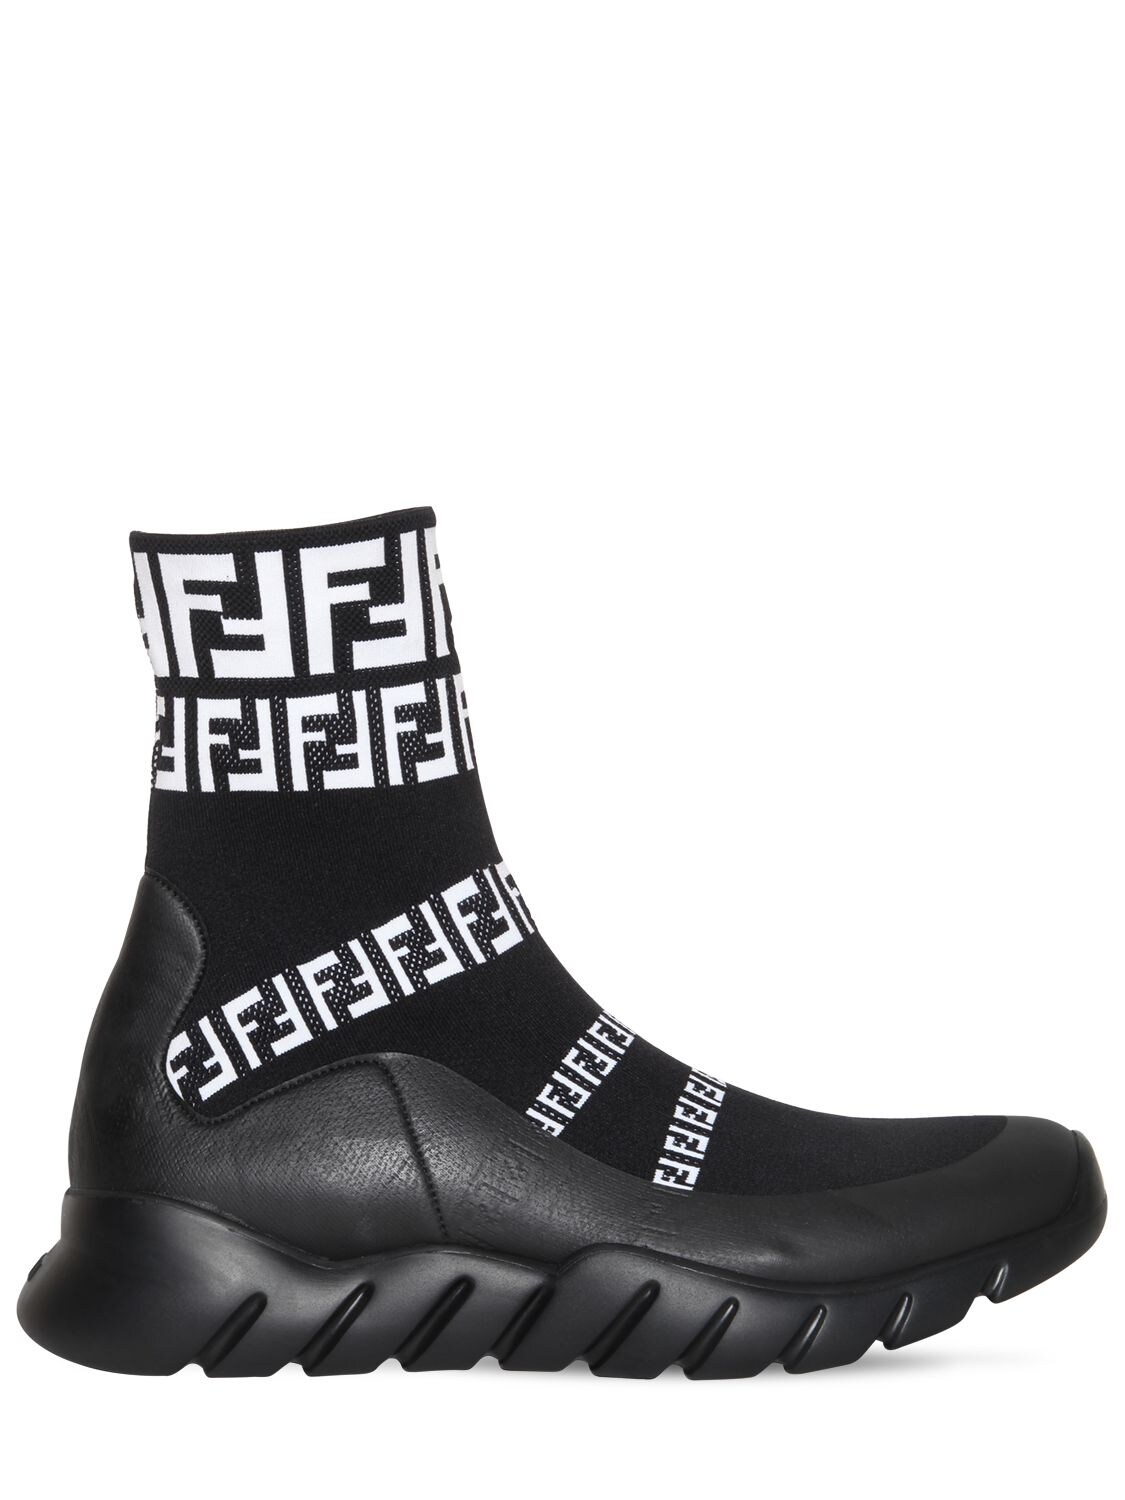 FENDI FF袜子运动鞋,68IDNT003-RJBZNJG1